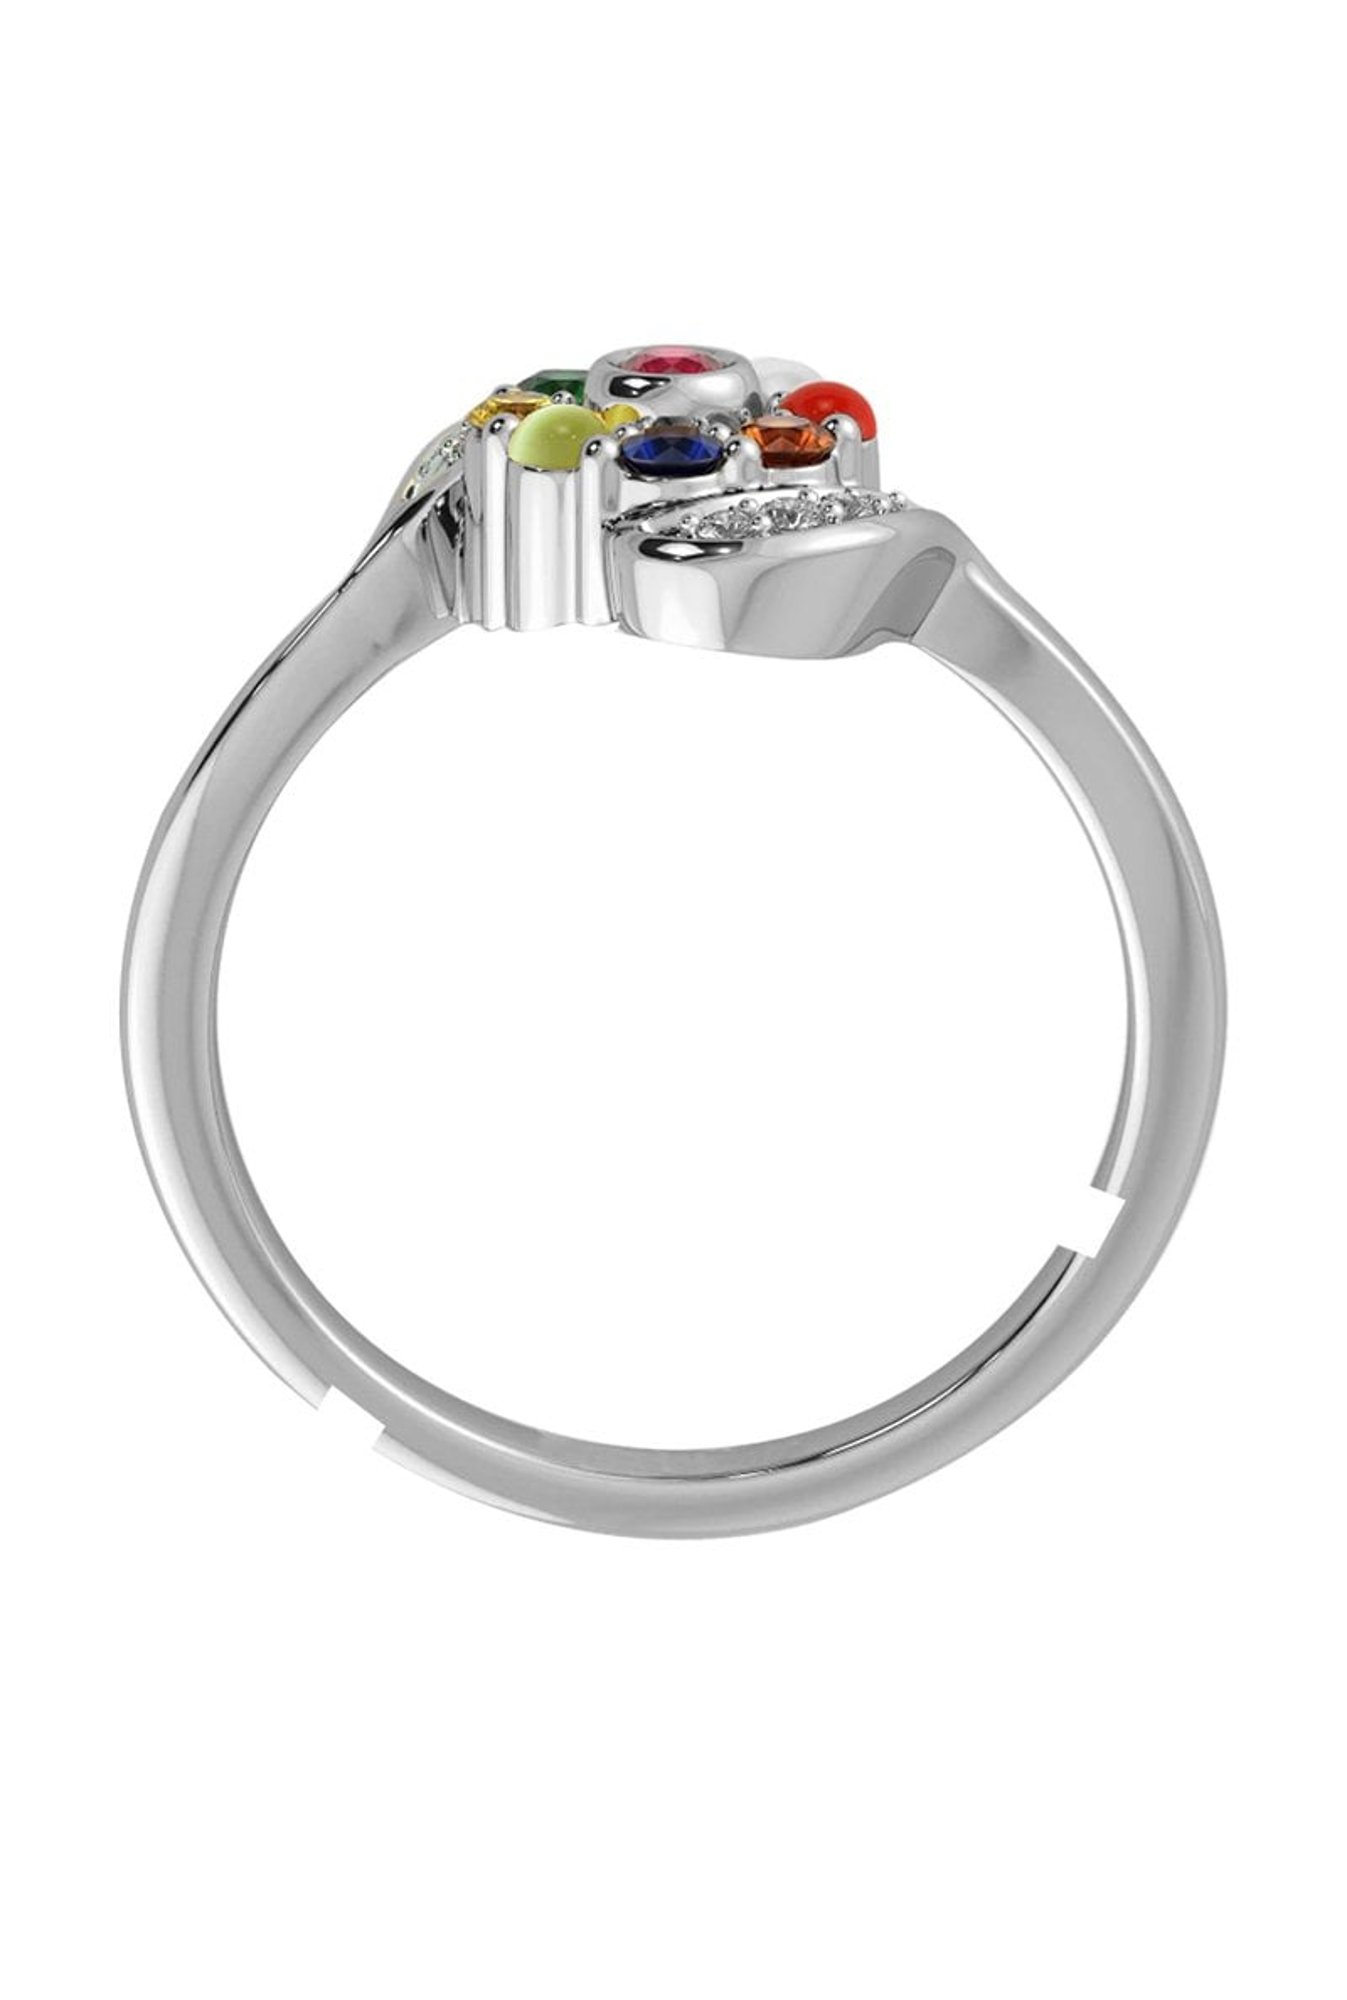 Navratan” 9 Precious Gemstone Studded 925 Sterling Silver Ring SR-1012 –  Online Gemstone & Jewelry Store By Gehna Jaipur